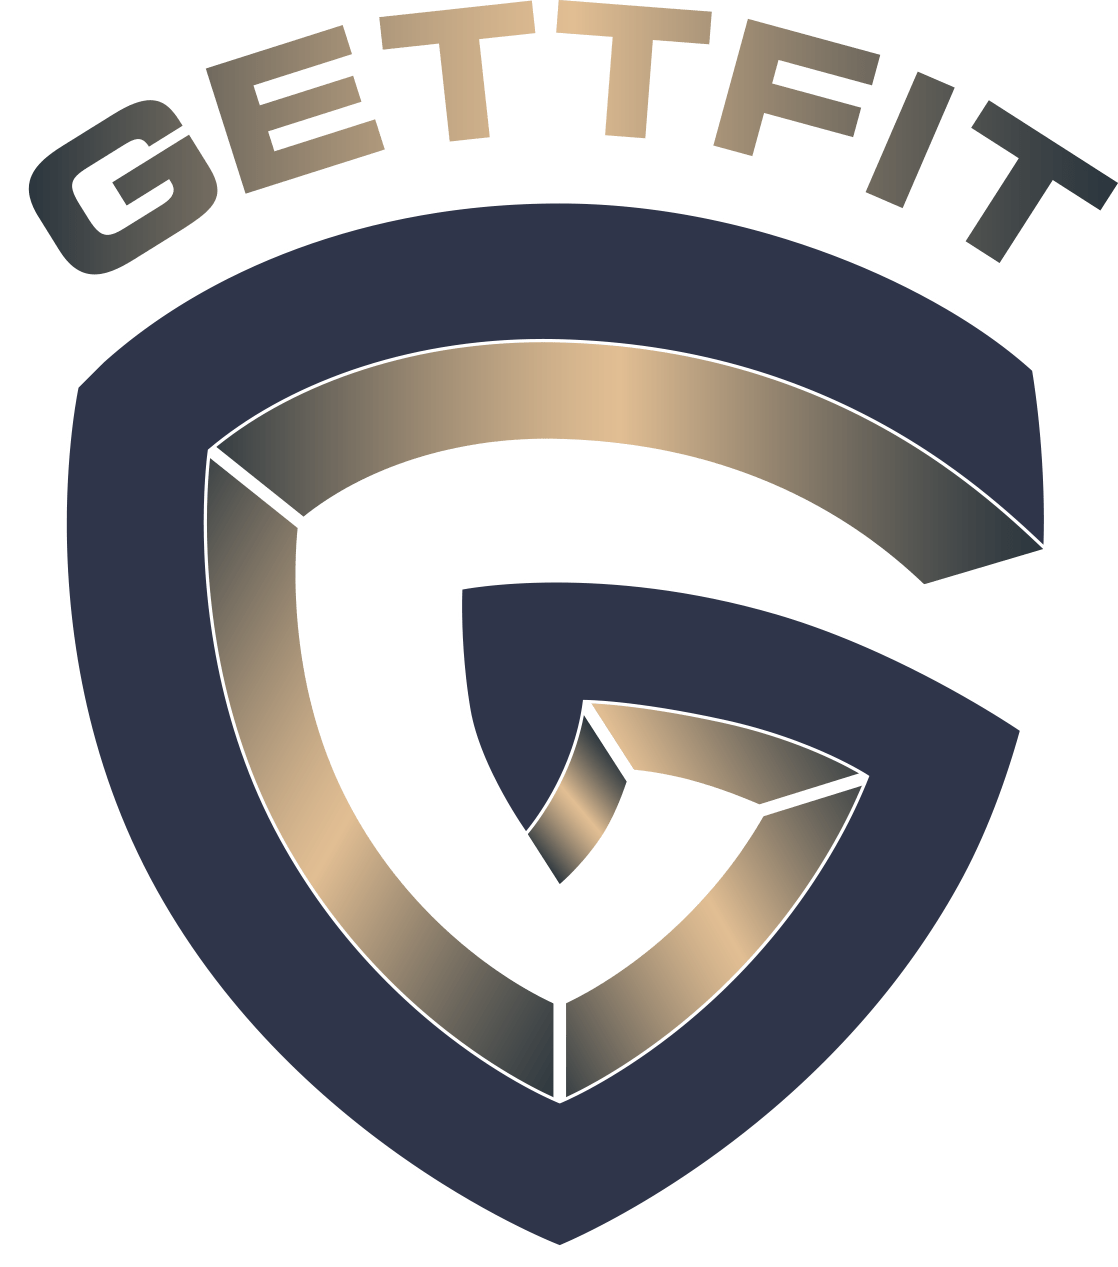 GettFit